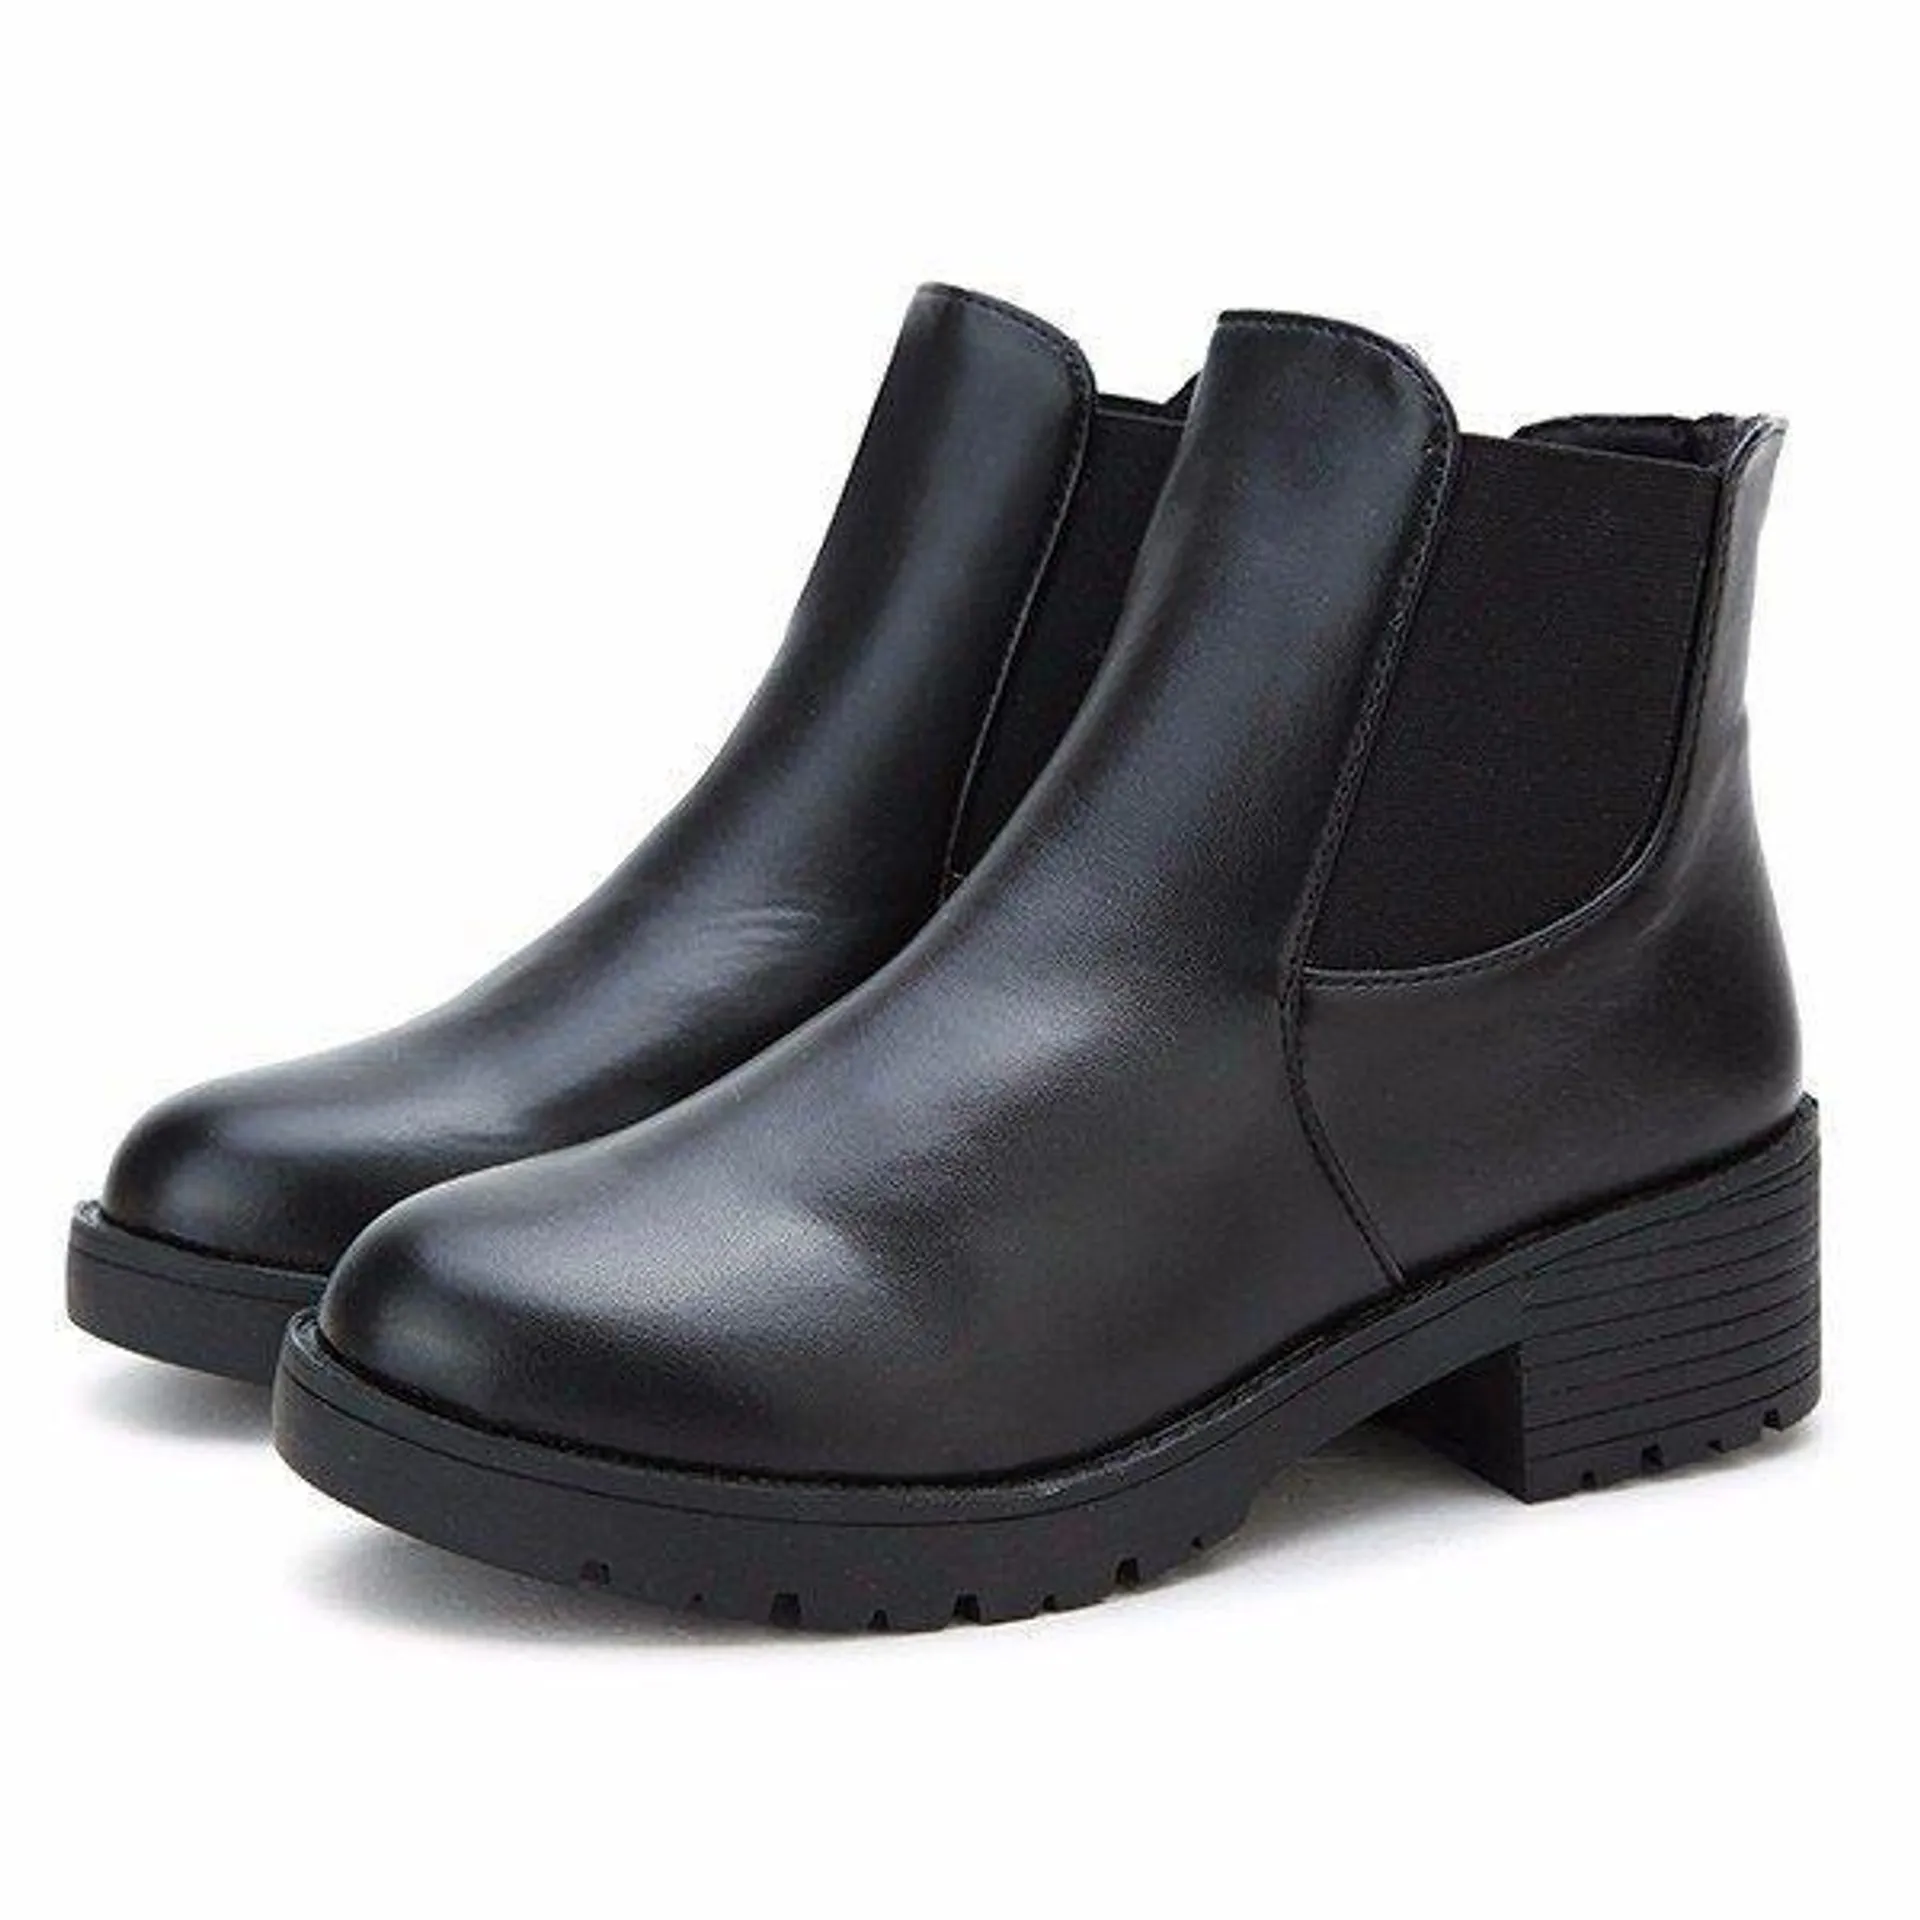 Newchic Black Square Heel Boots